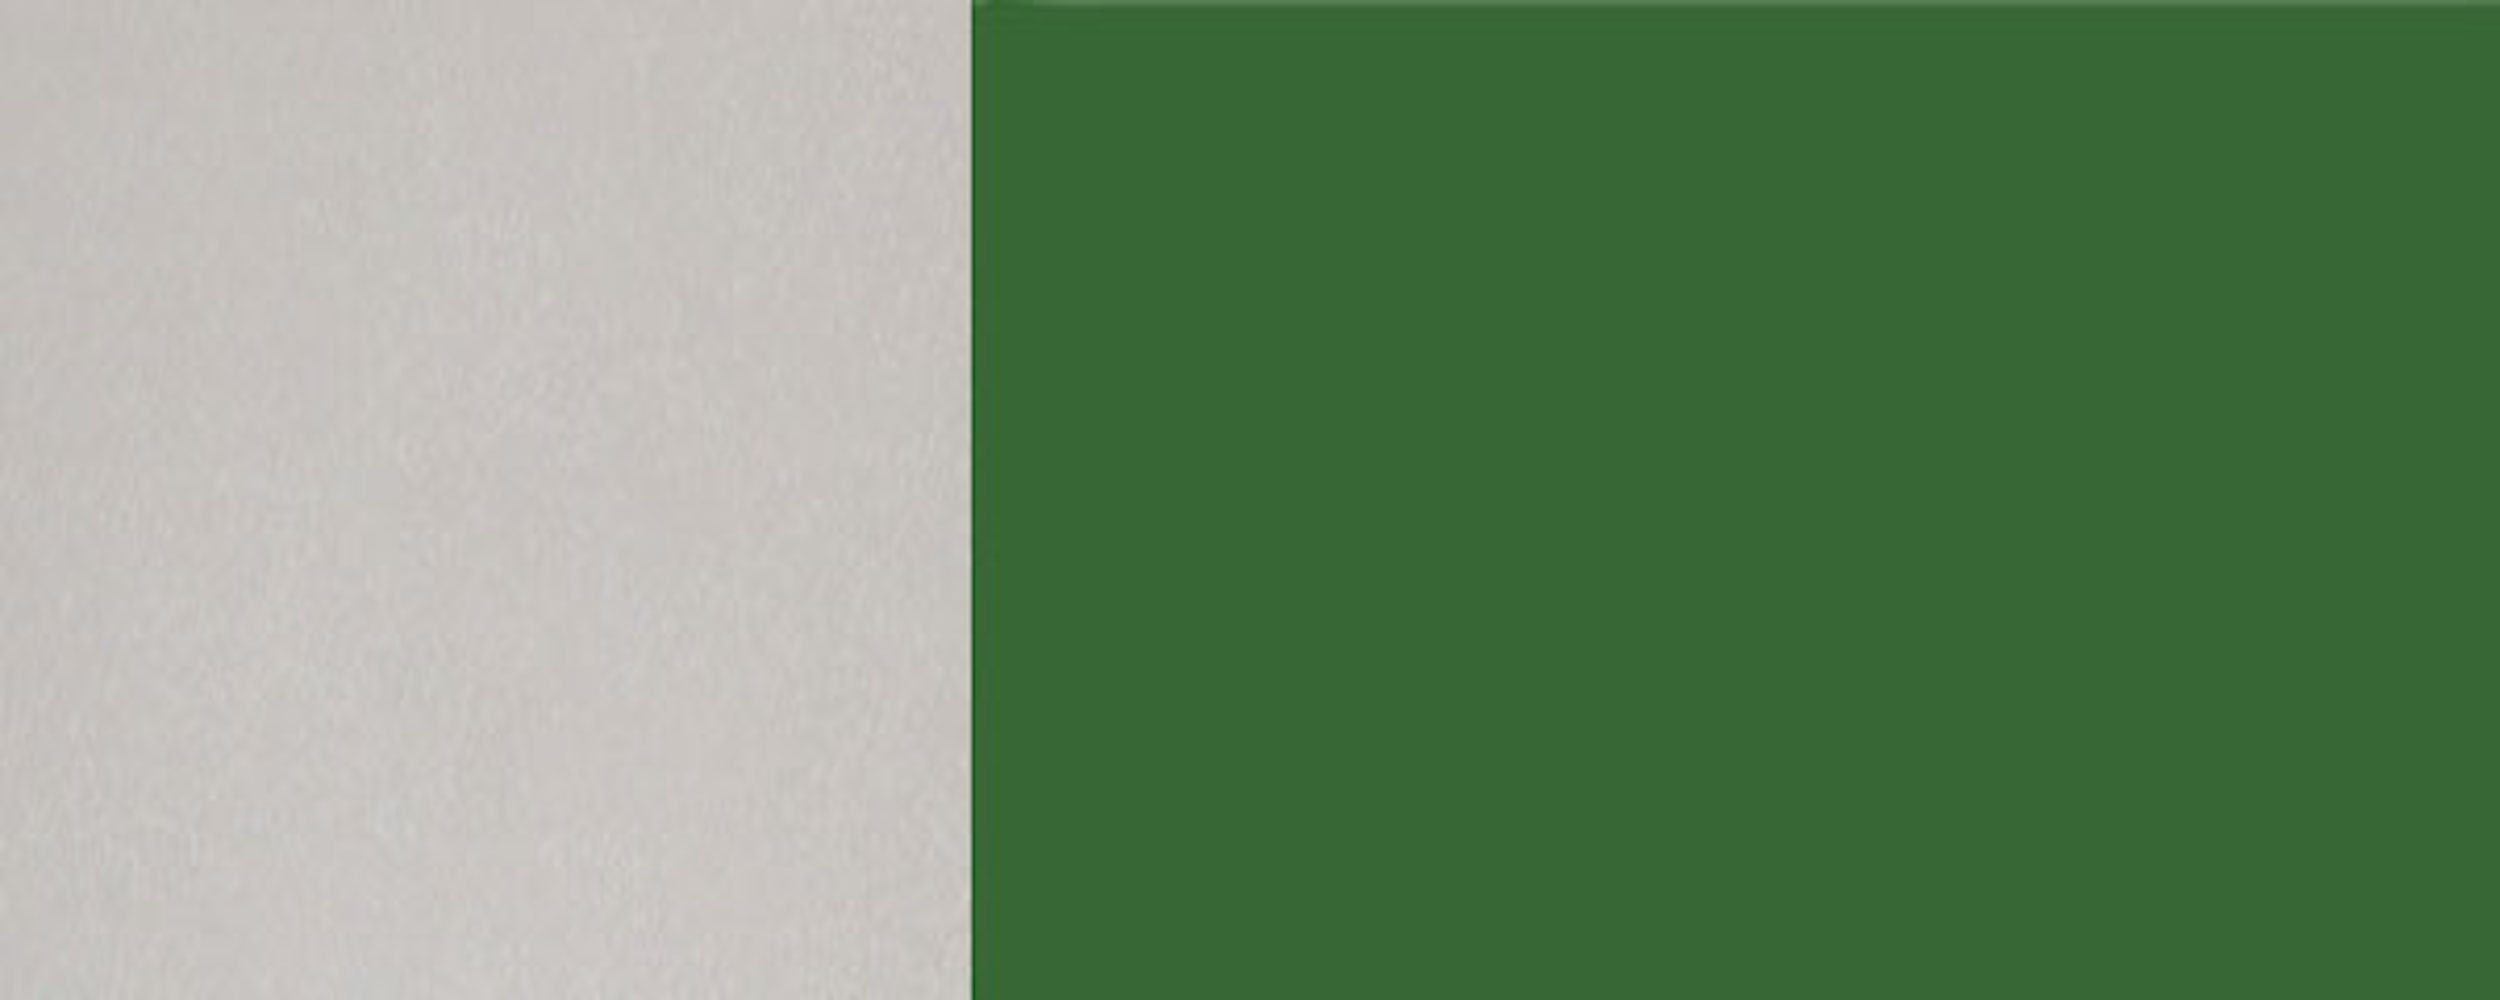 grifflos RAL und Klapphängeschrank Korpusfarbe 1-türig Hochglanz Ausführung Florence 60cm (Florence) wählbar smaragdgrün Feldmann-Wohnen Front-, 6001